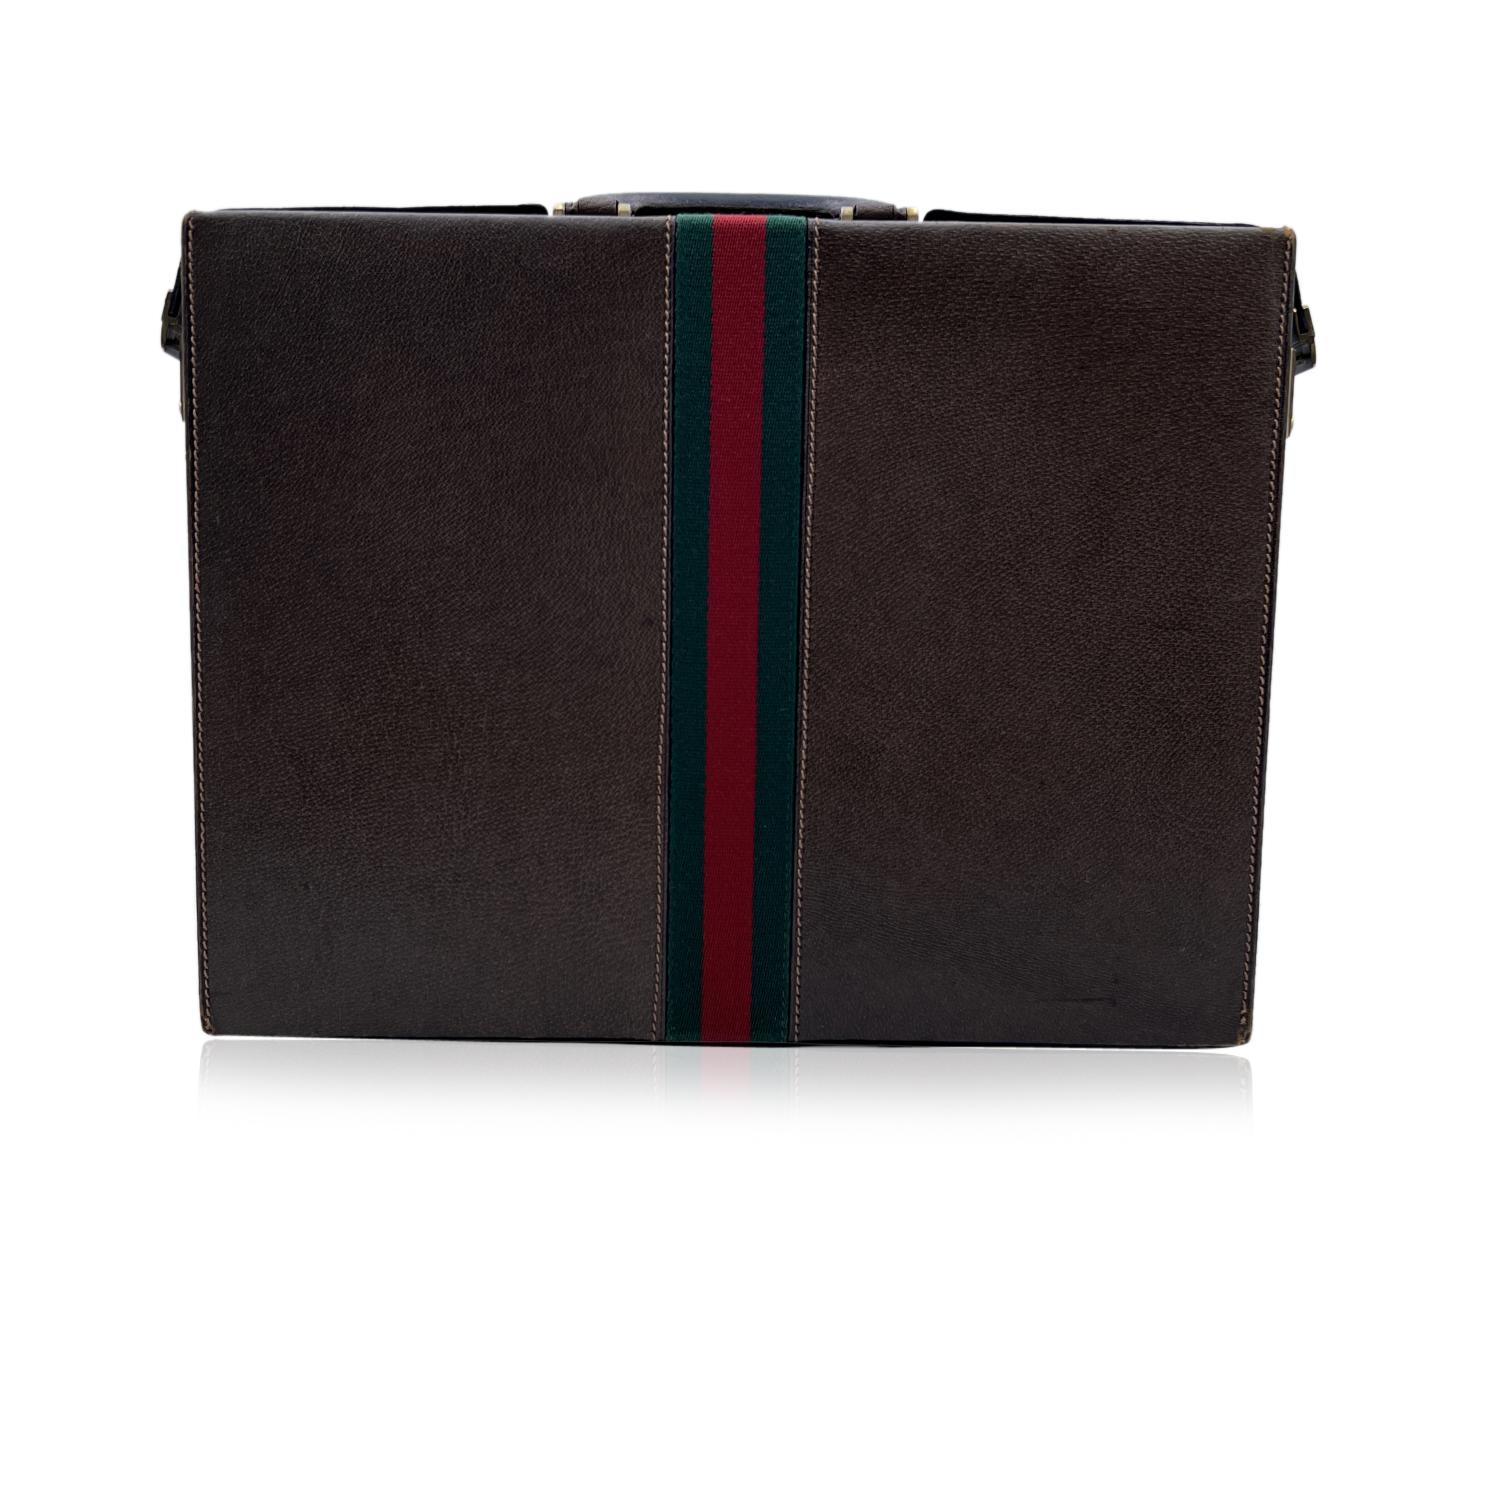 Black Gucci Vintage Brown Leather Hard Side Briefcase Work Bag with Stripes